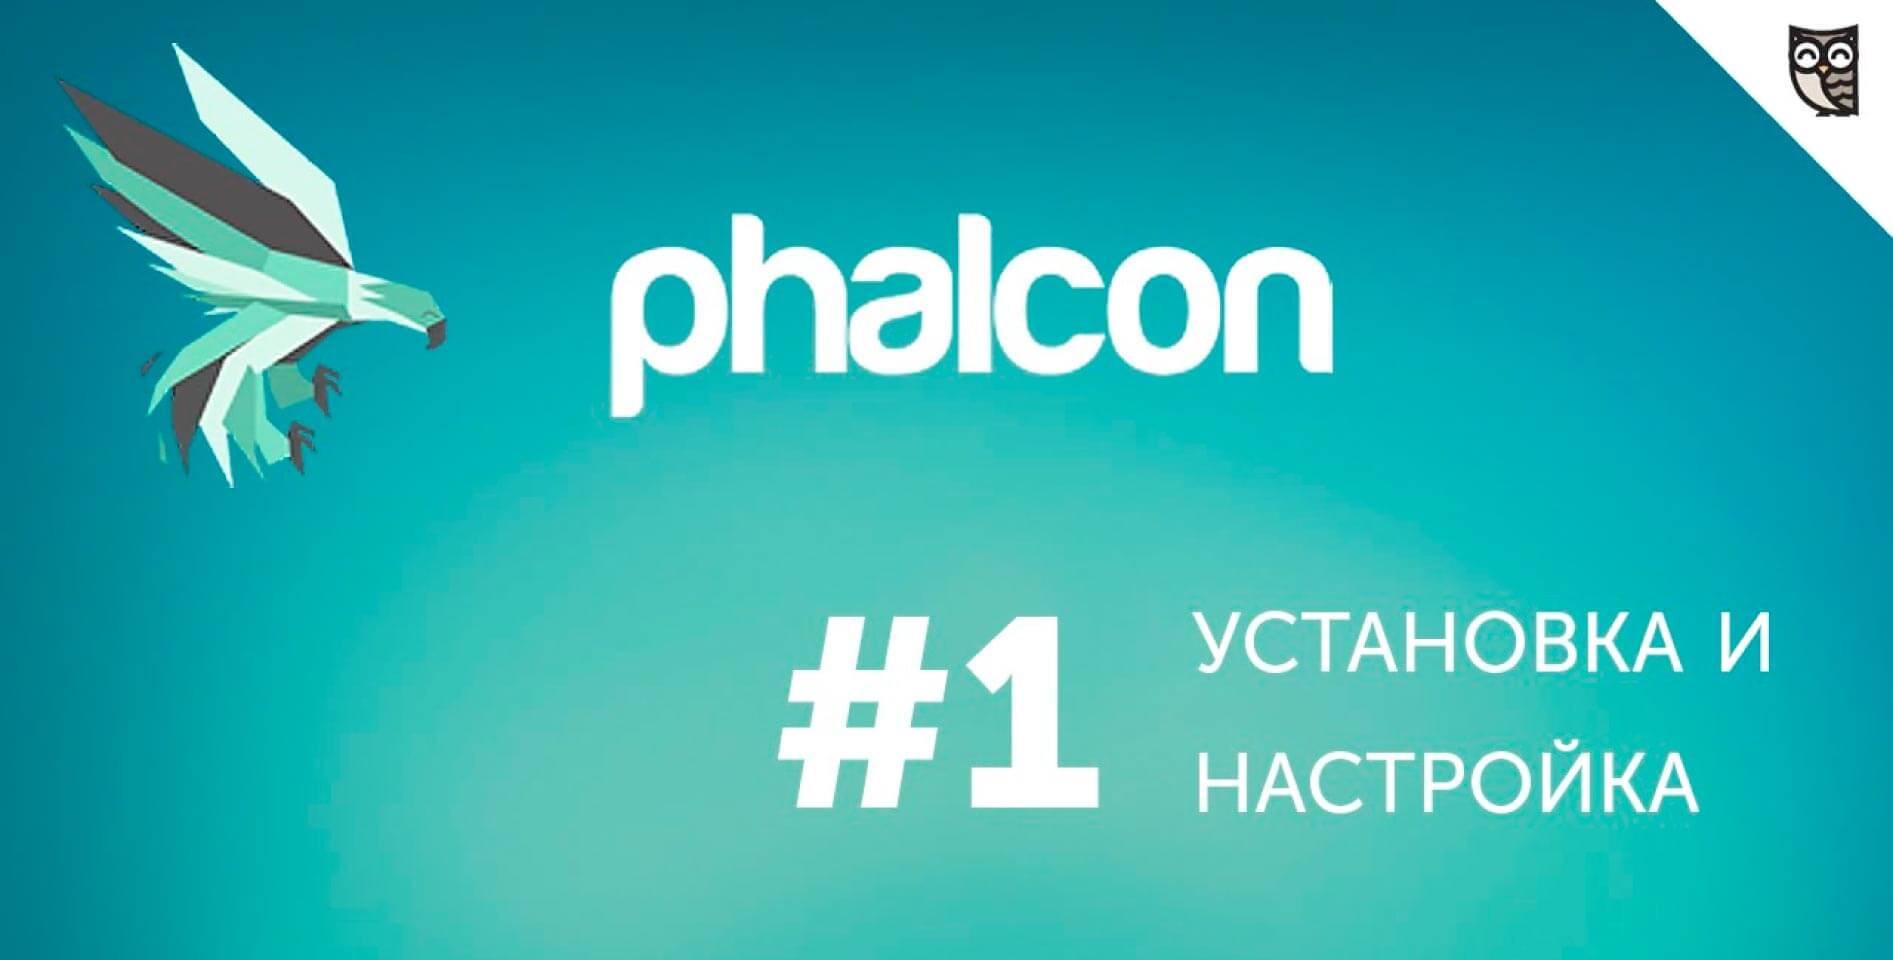 Антон Голомазов — Введение в Phalcon PHP